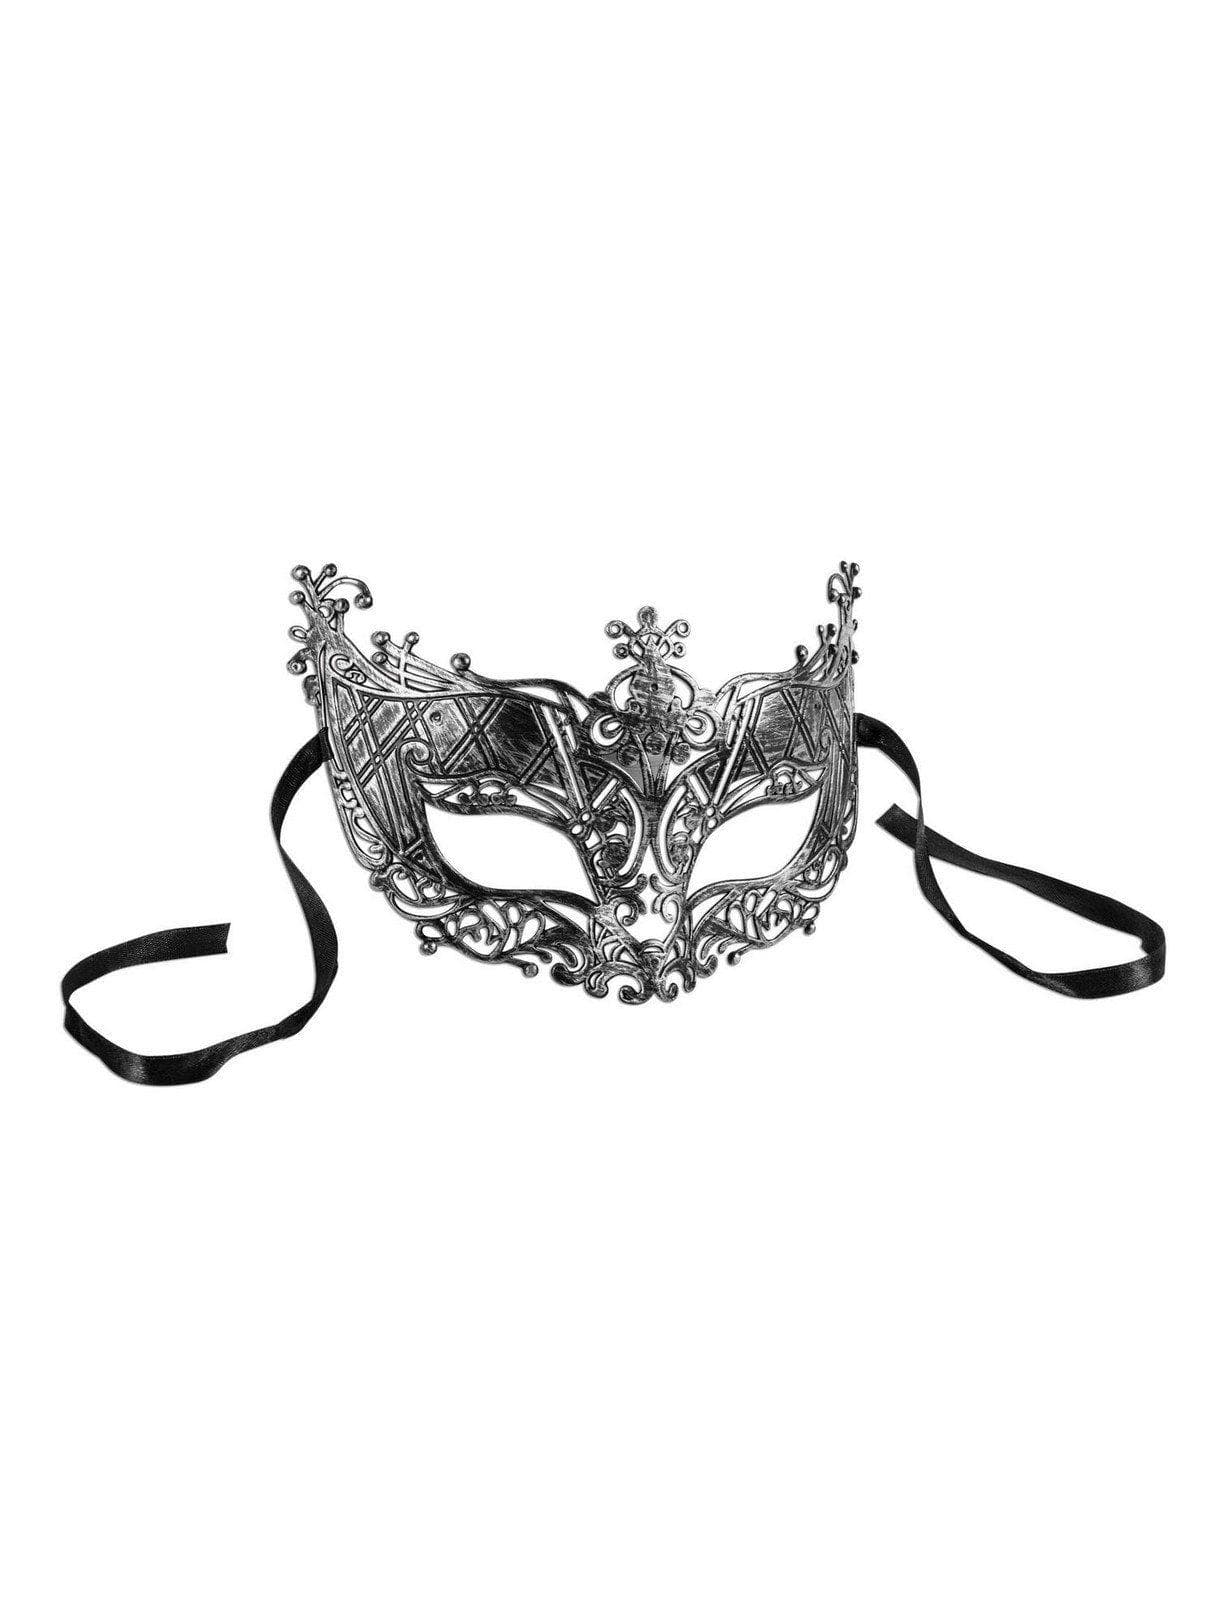 Filigree Silver Mask - costumes.com